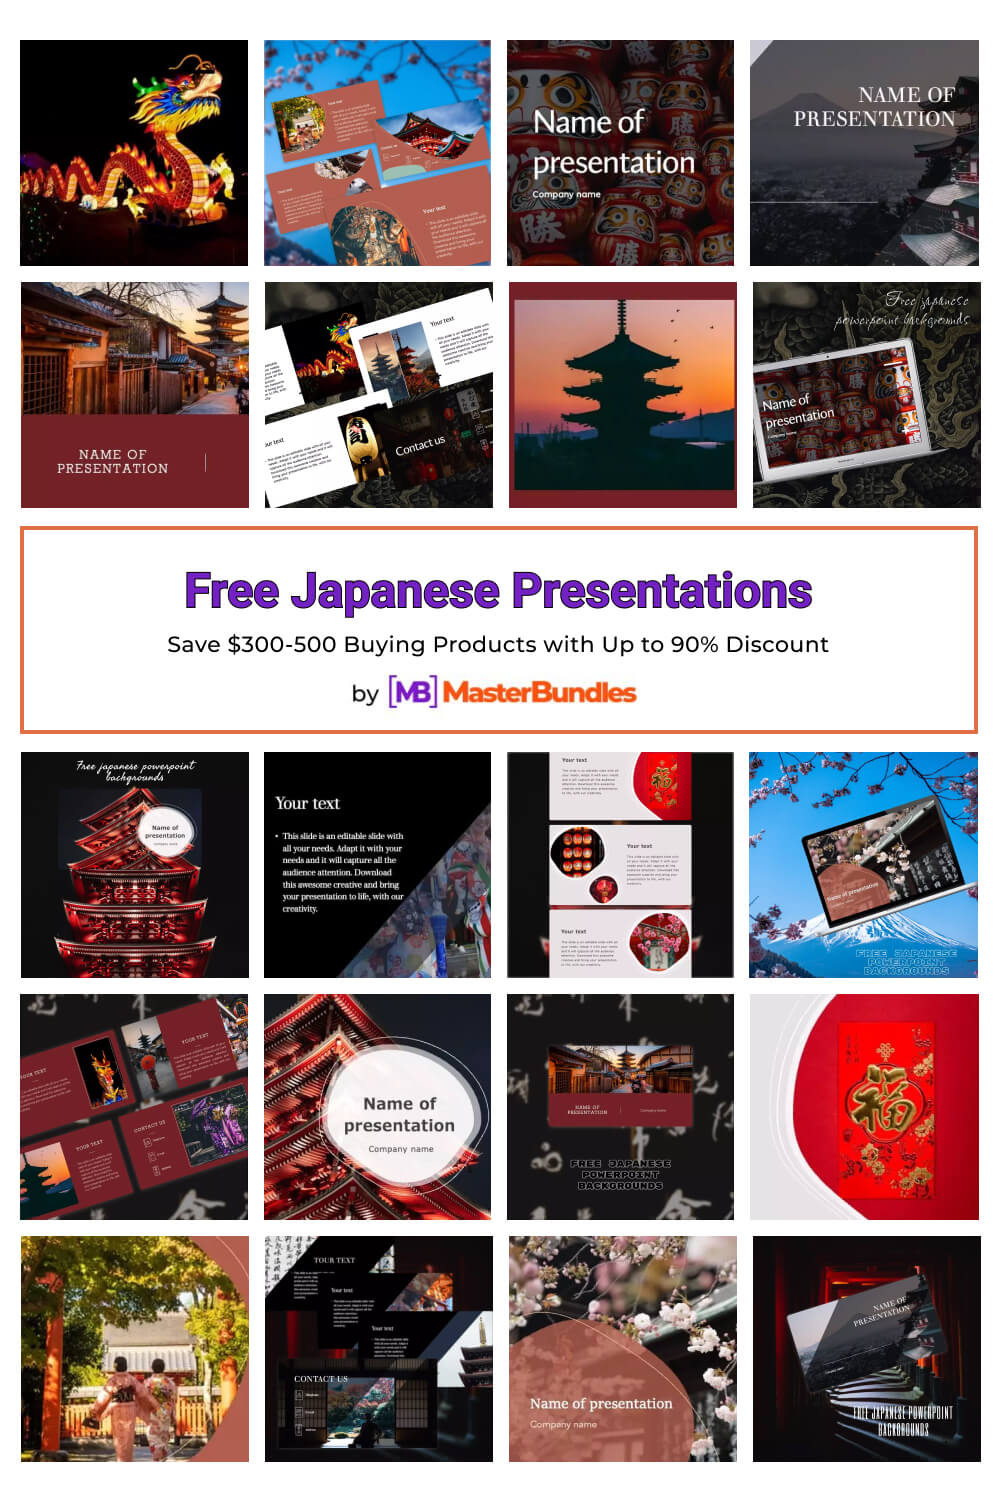 free japanese presentations pinterest image.